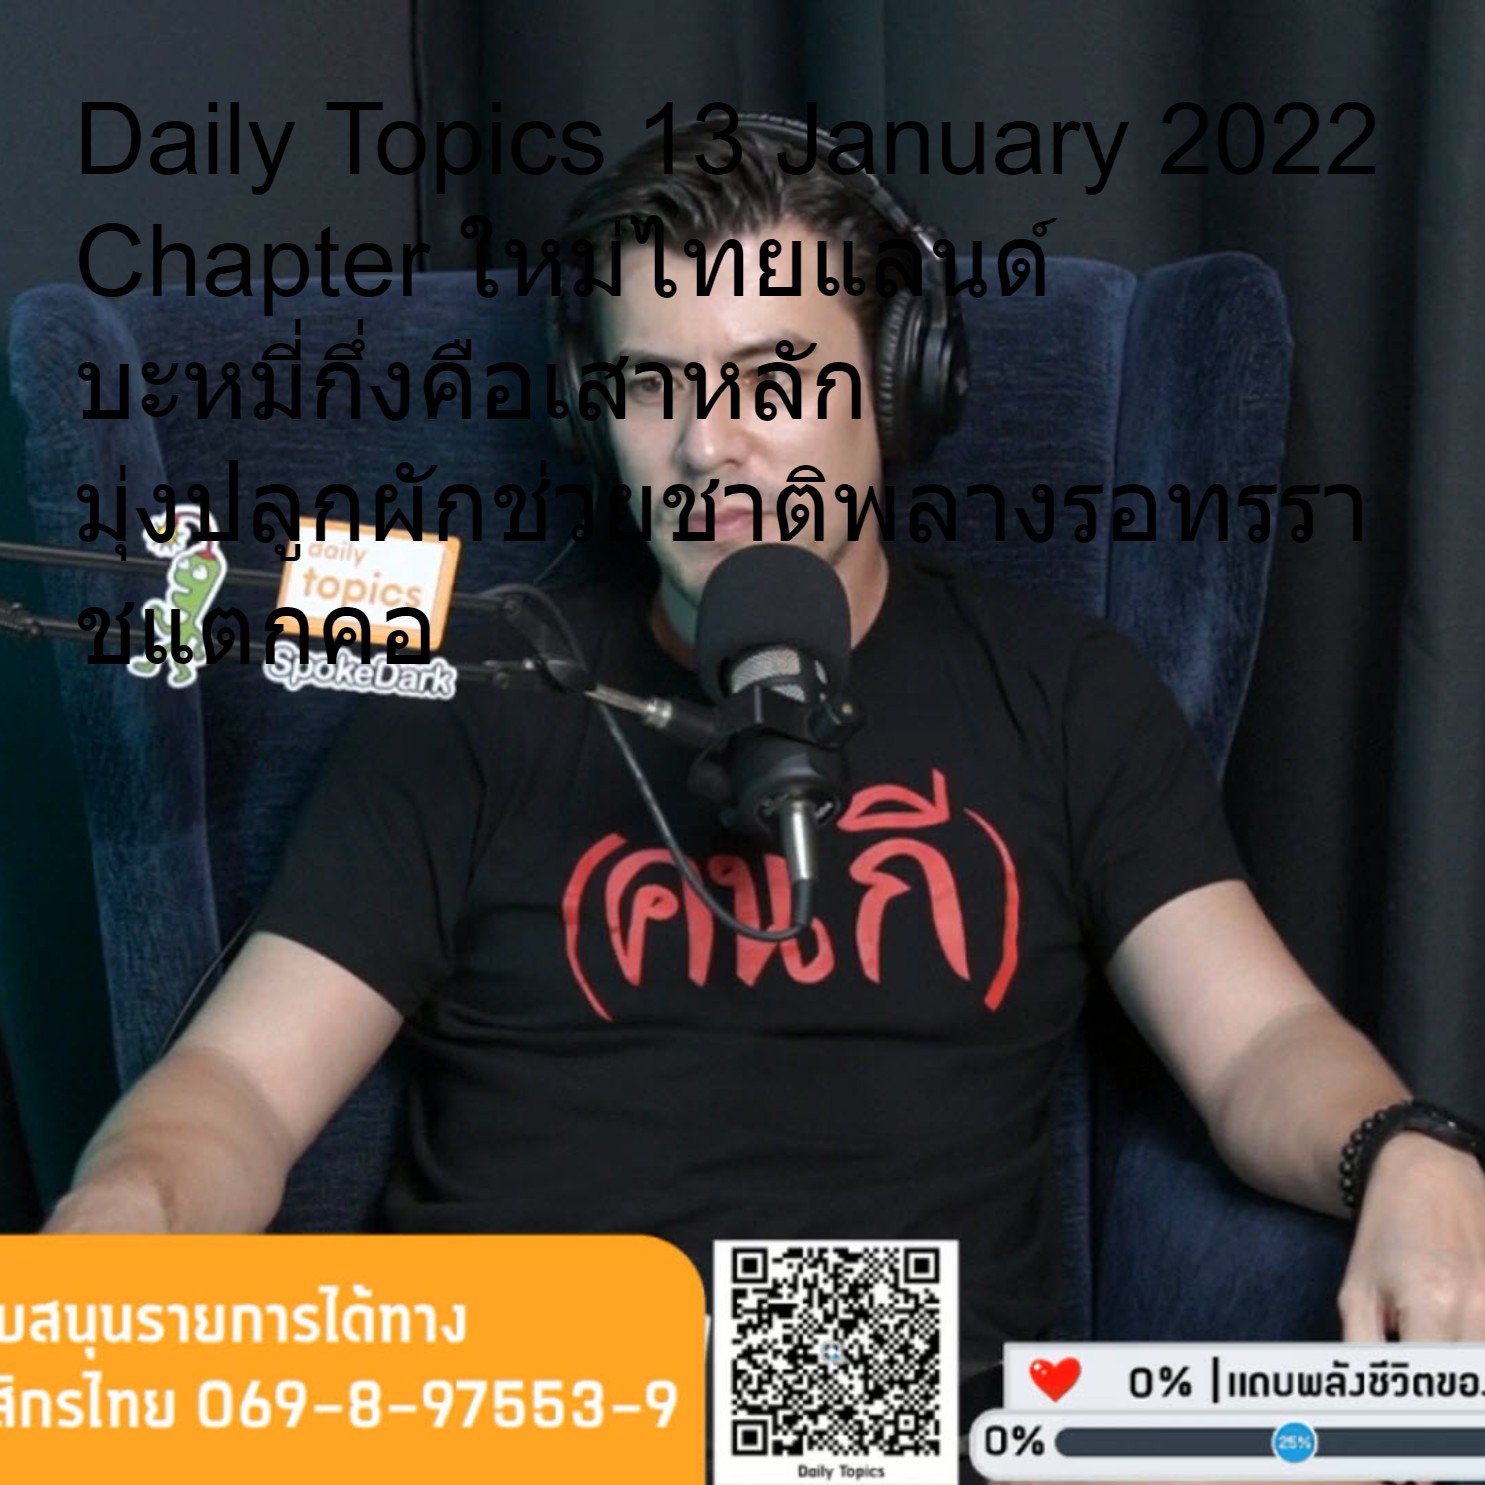 Daily Topics 13 January 2022 Chapter ใหม่ไทยแลนด์ บะหมี่กึ่งคือเสาหลัก มุ่งปลูกผักช่วยชาติพลางรอทรราชแตกคอ